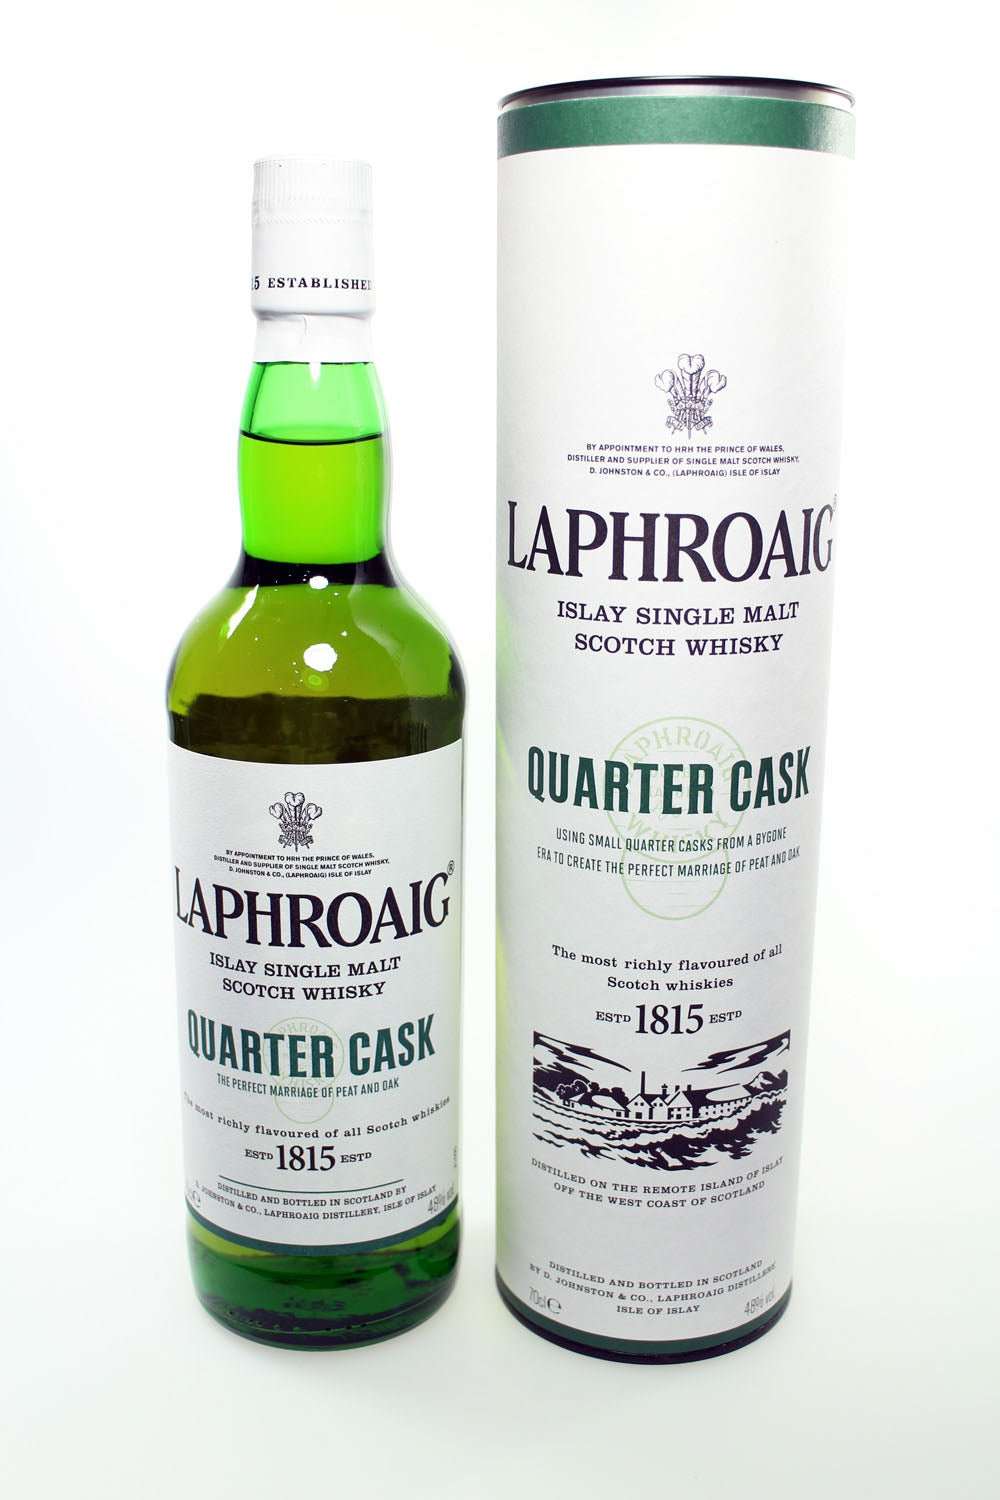 Buy Laphroaig, Quarter Cask, Islay, Single Malt Scotch Whisky (48